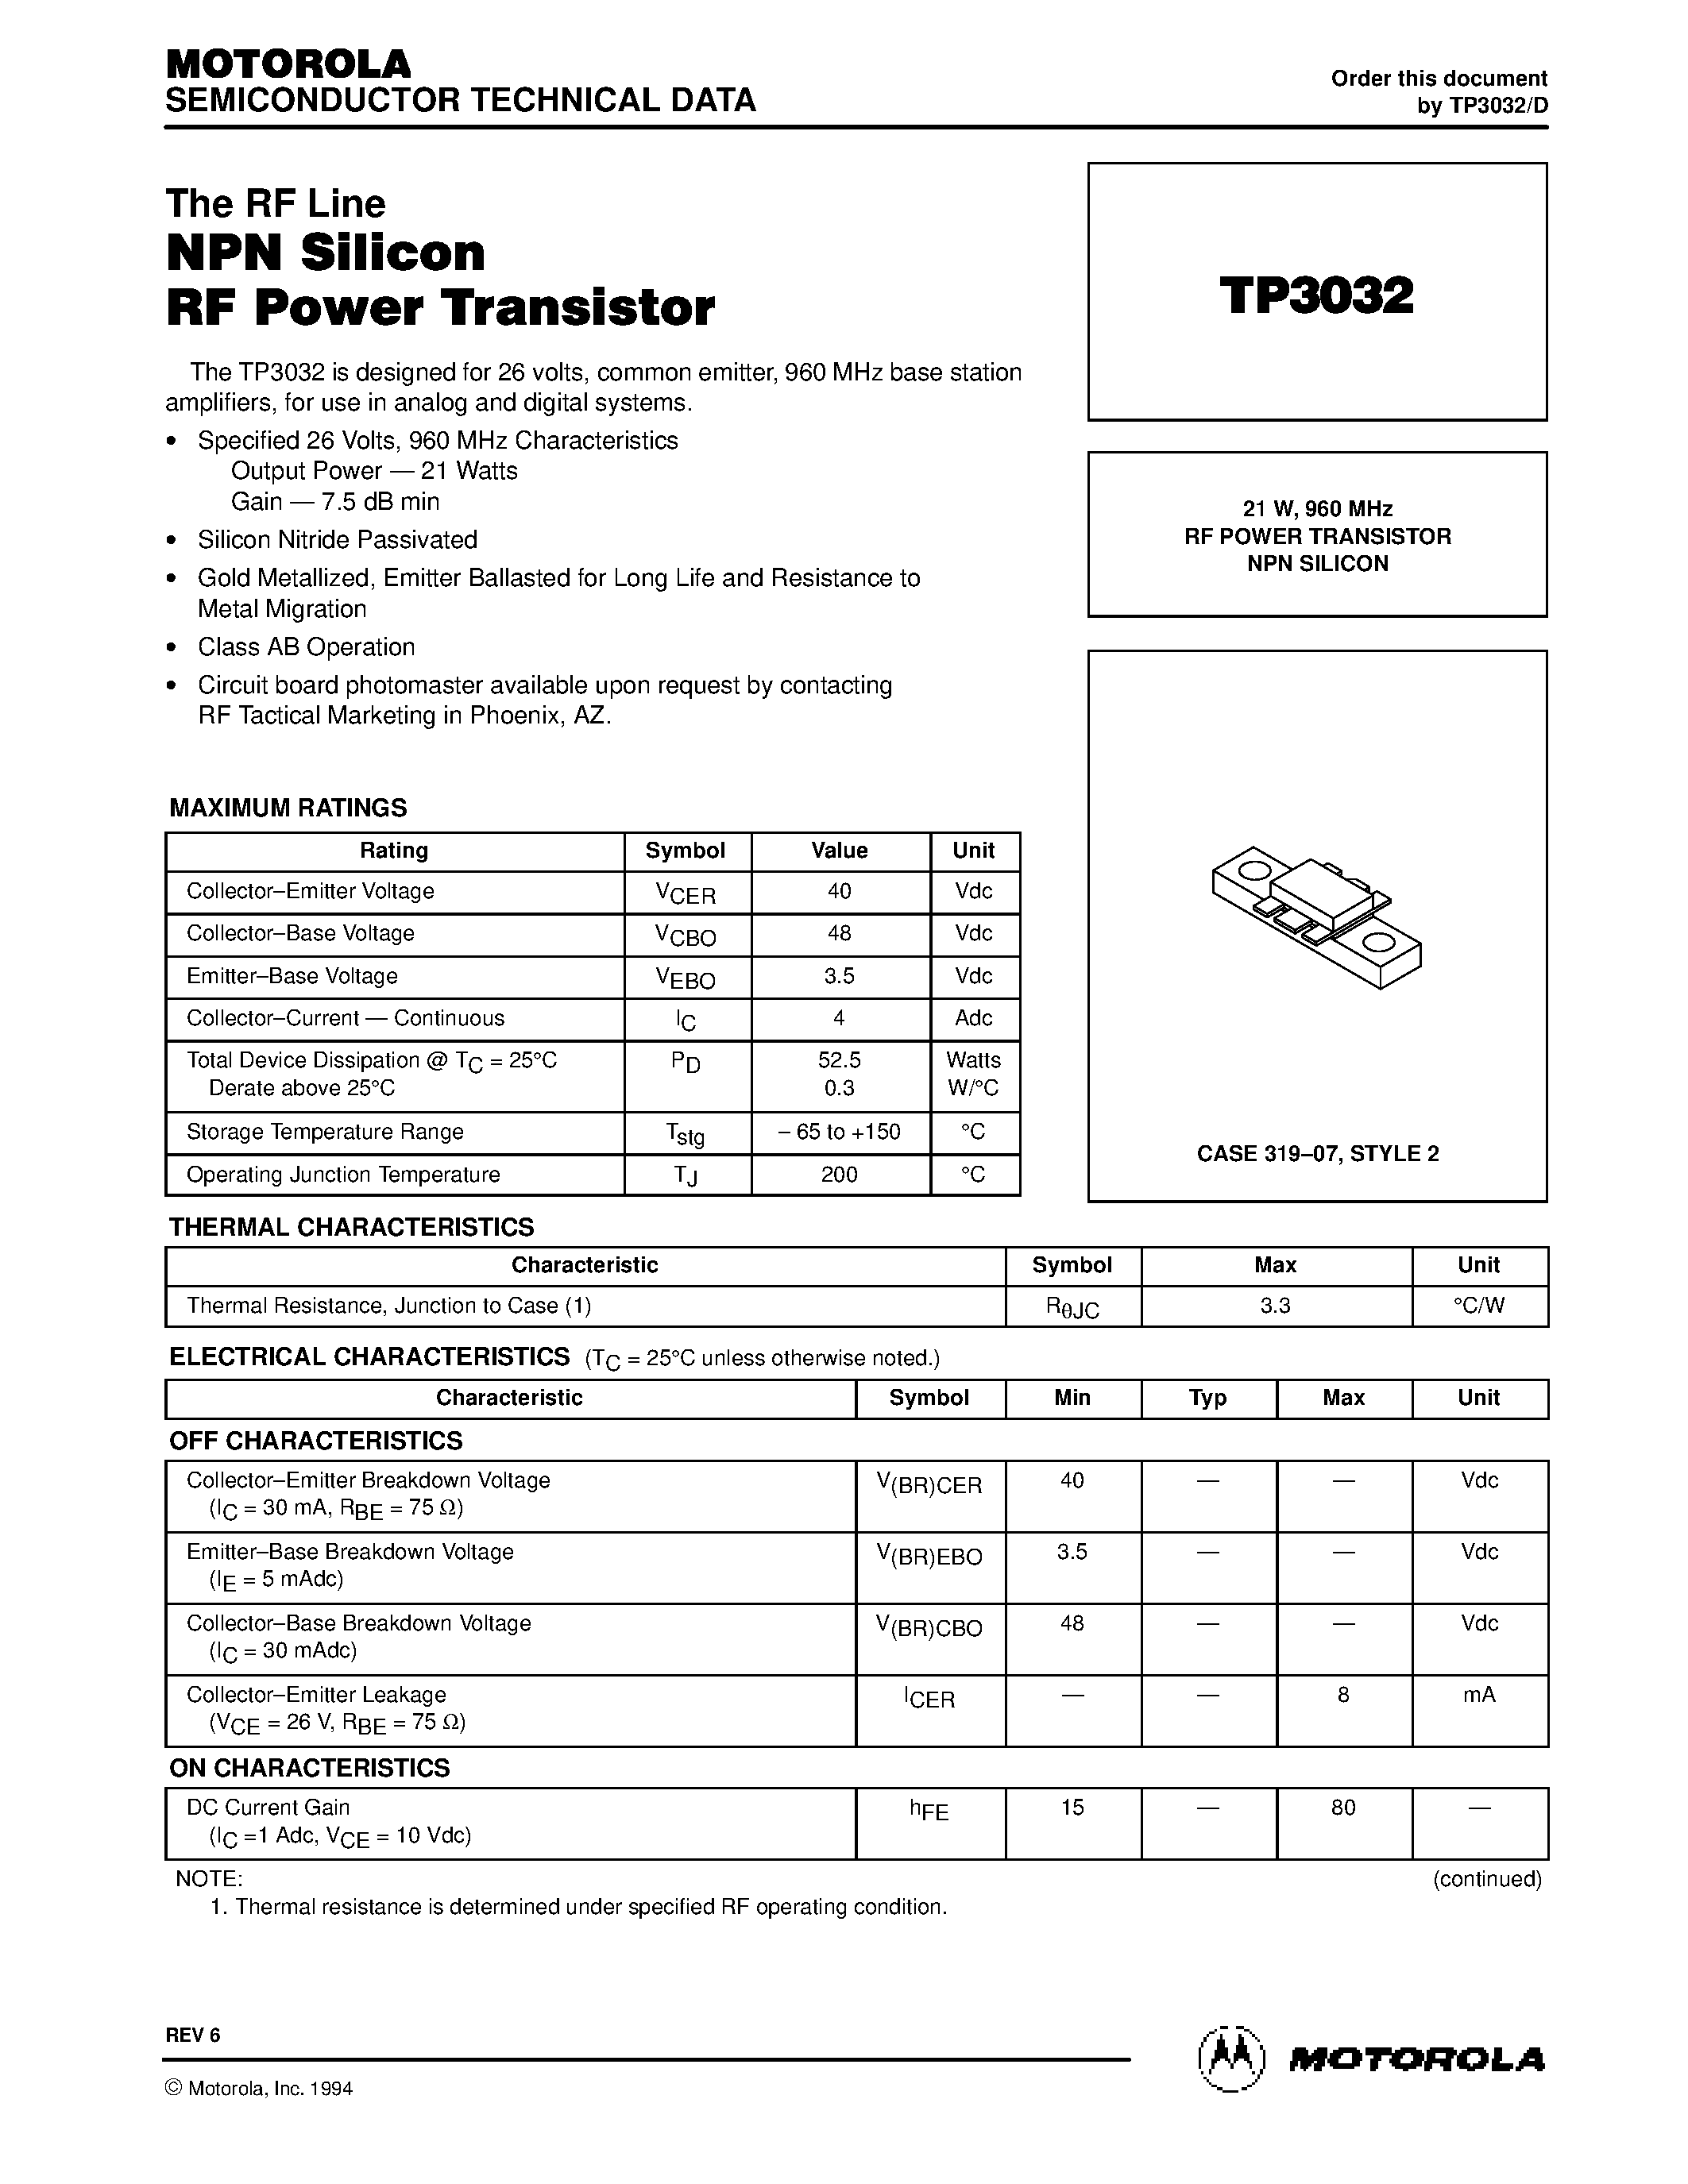 Даташит TP3032 - RF POWER TRANSISTOR NPN SILICON страница 1